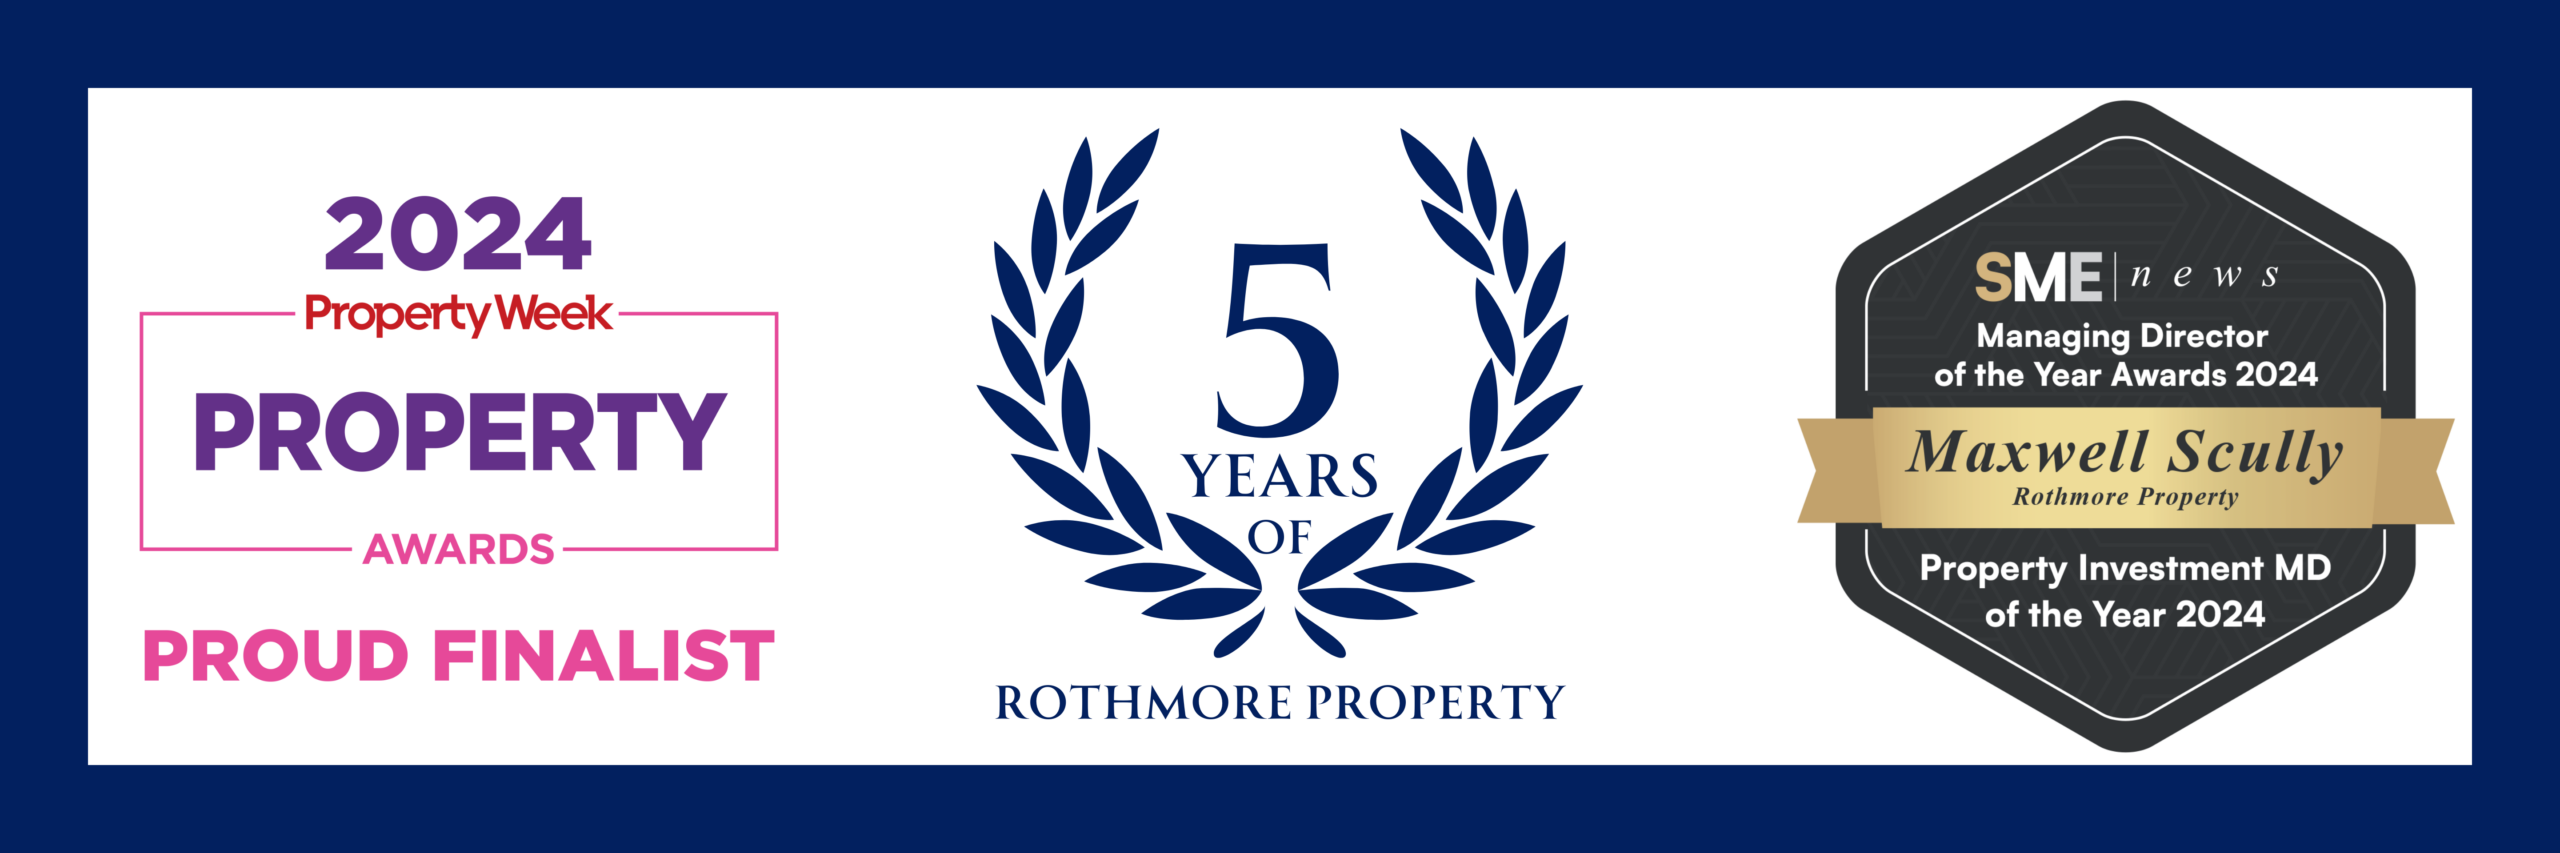 rothmore property award nominations